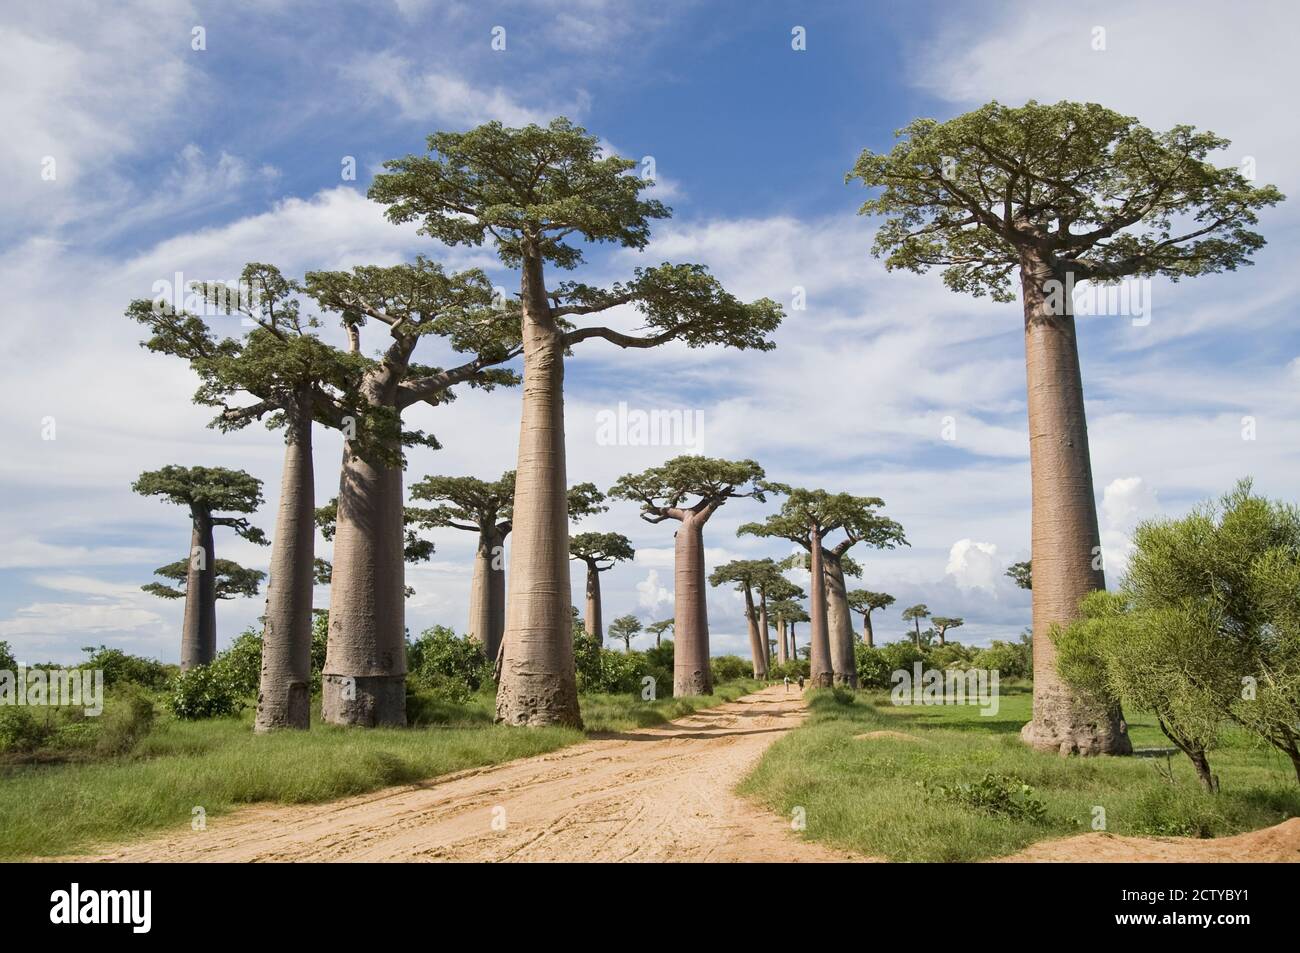 Baobab trees (Adansonia digitata) along a dirt road, Avenue of the Baobabs, Morondava, Madagascar Stock Photo